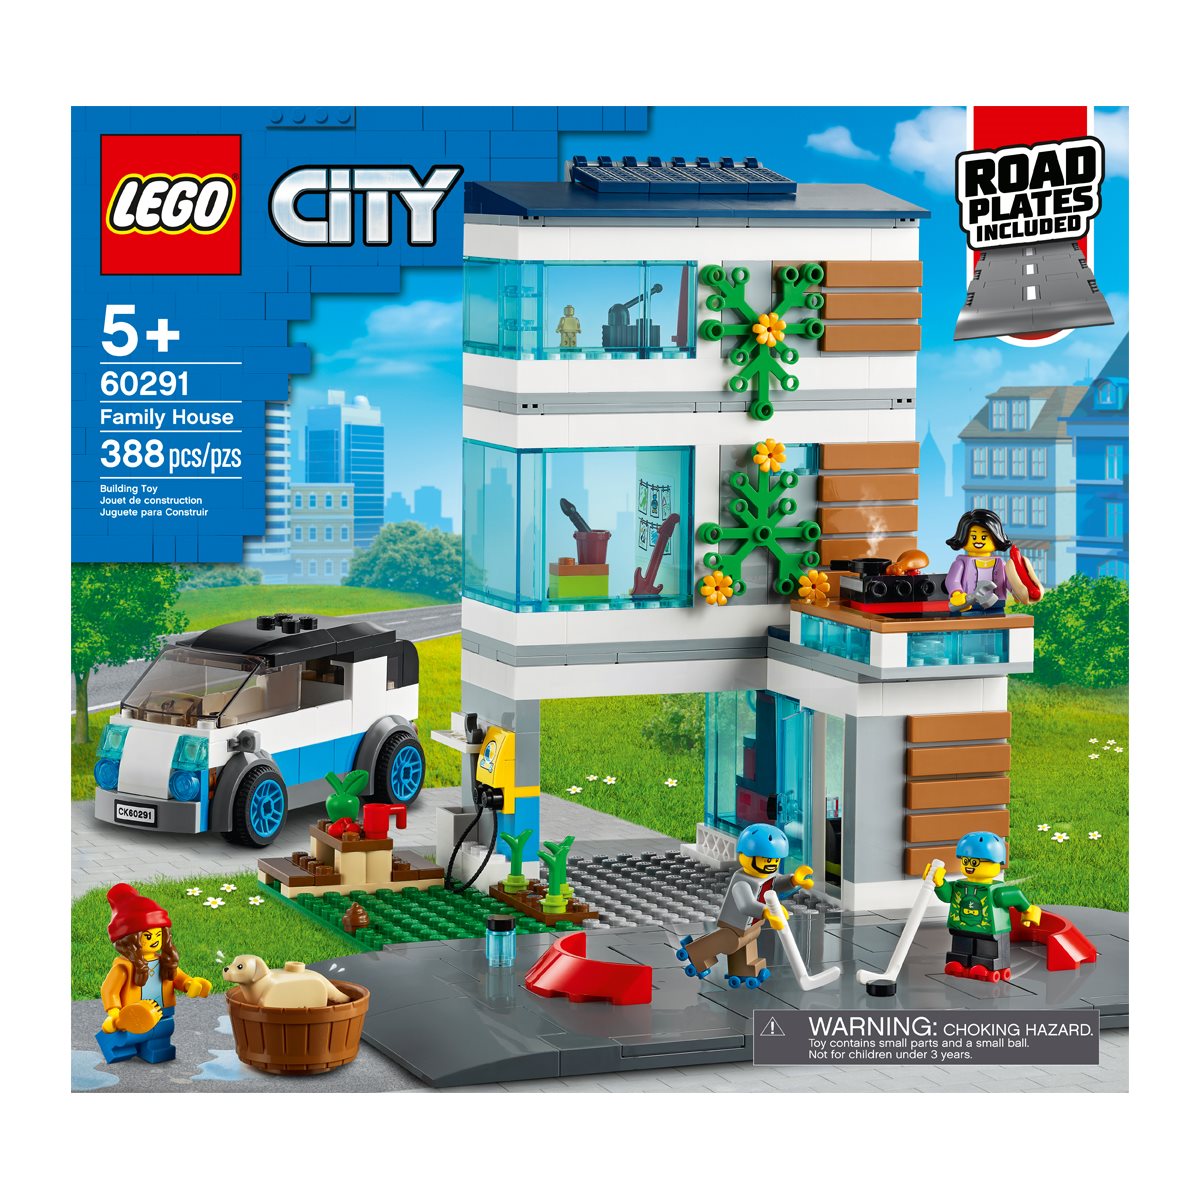 LEGO 60291 City - Entertainment Earth